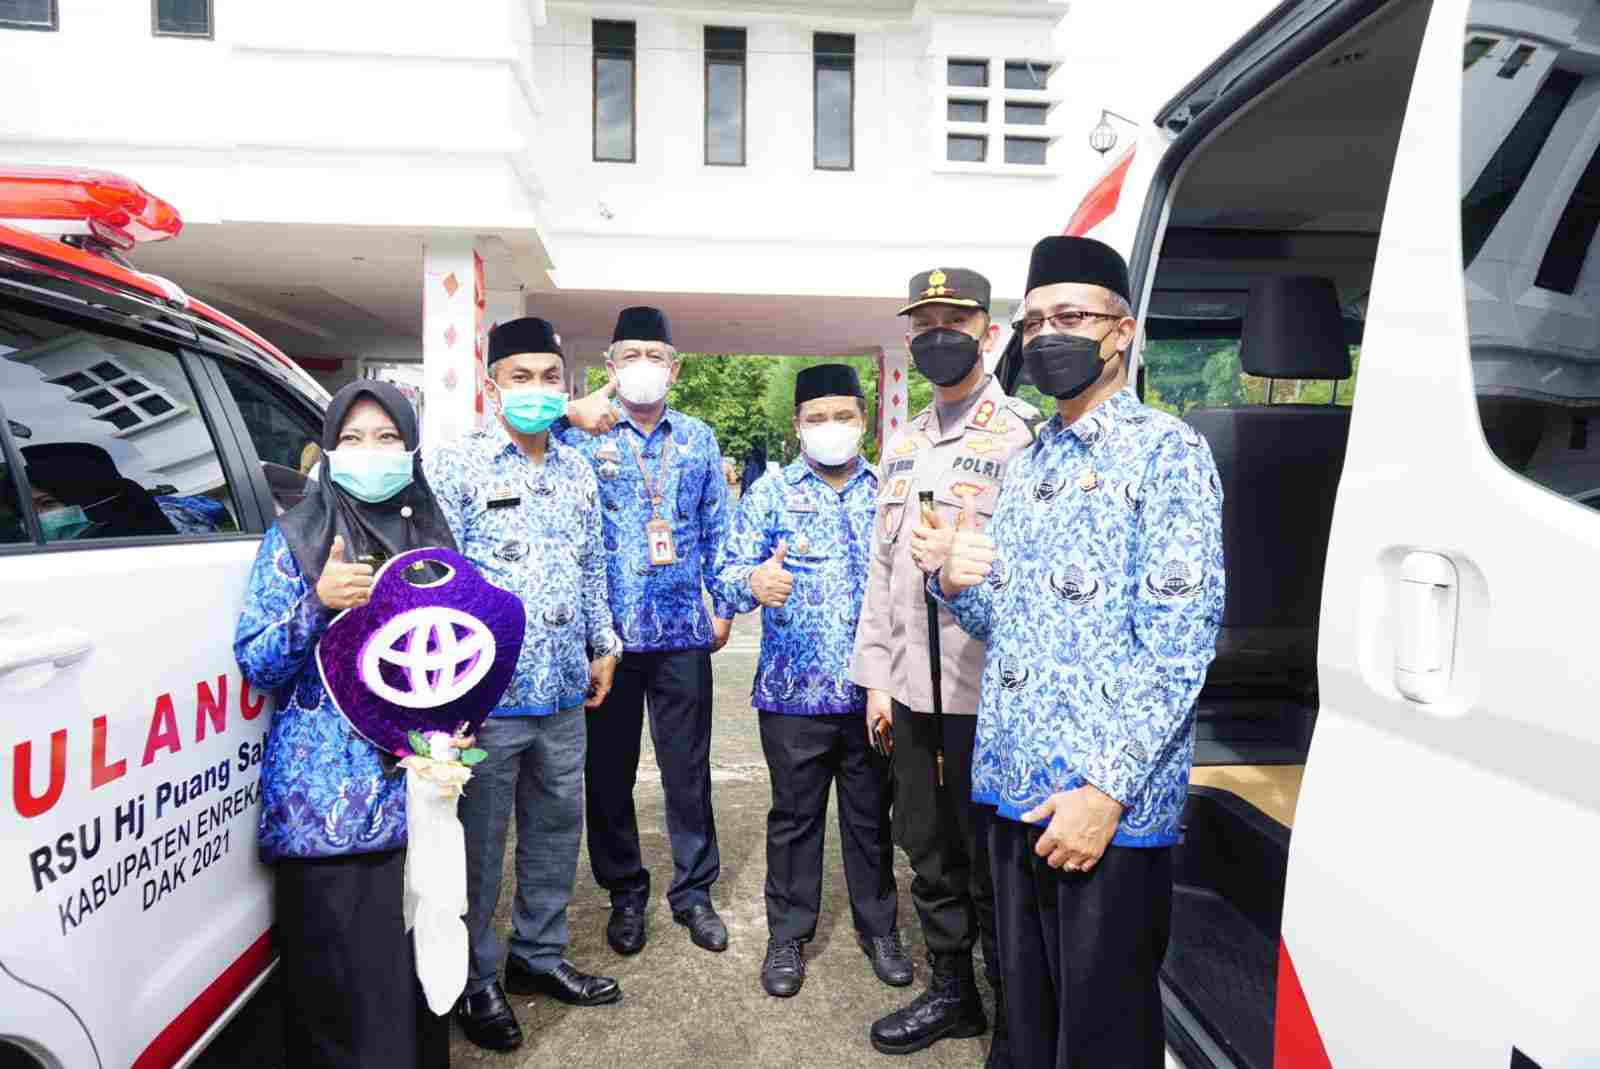 RS Puang Sabbe Enrekang Dapat Bantuan 2 Ambulance Senilai Rp 1,6 M